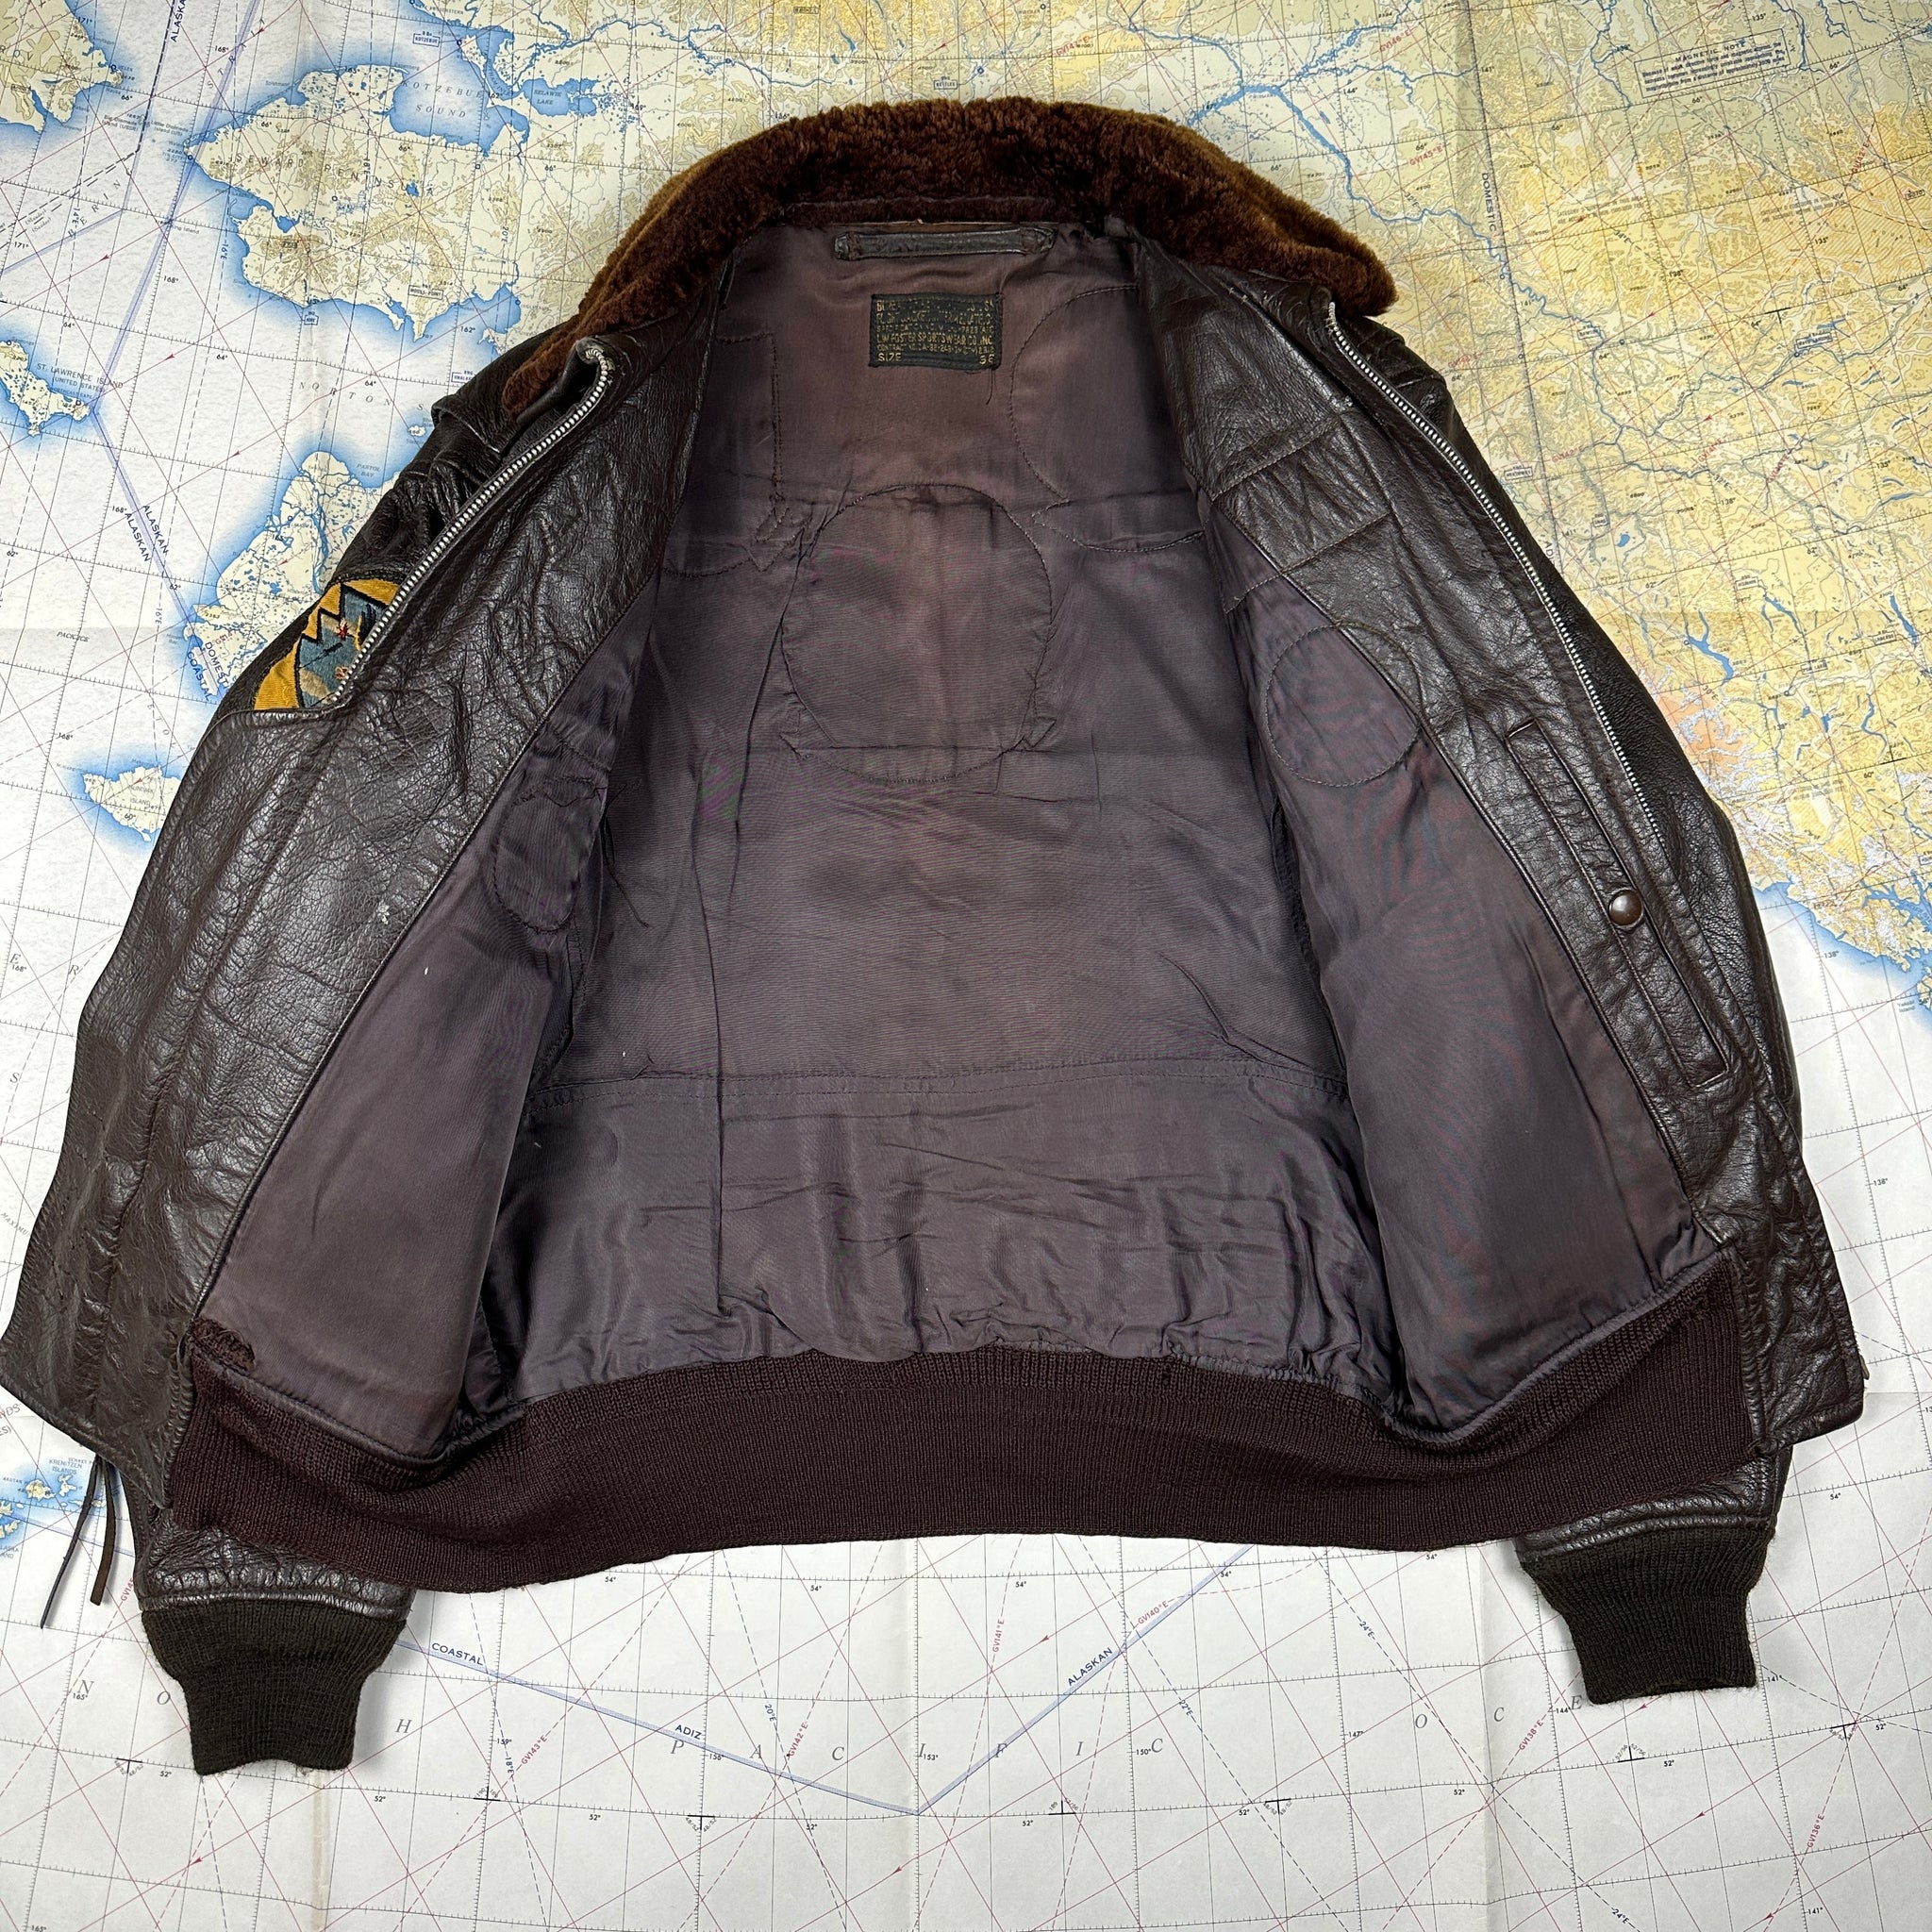 us-navy-g1-flight-jacket-patched-7_1024x1024@2x.jpg